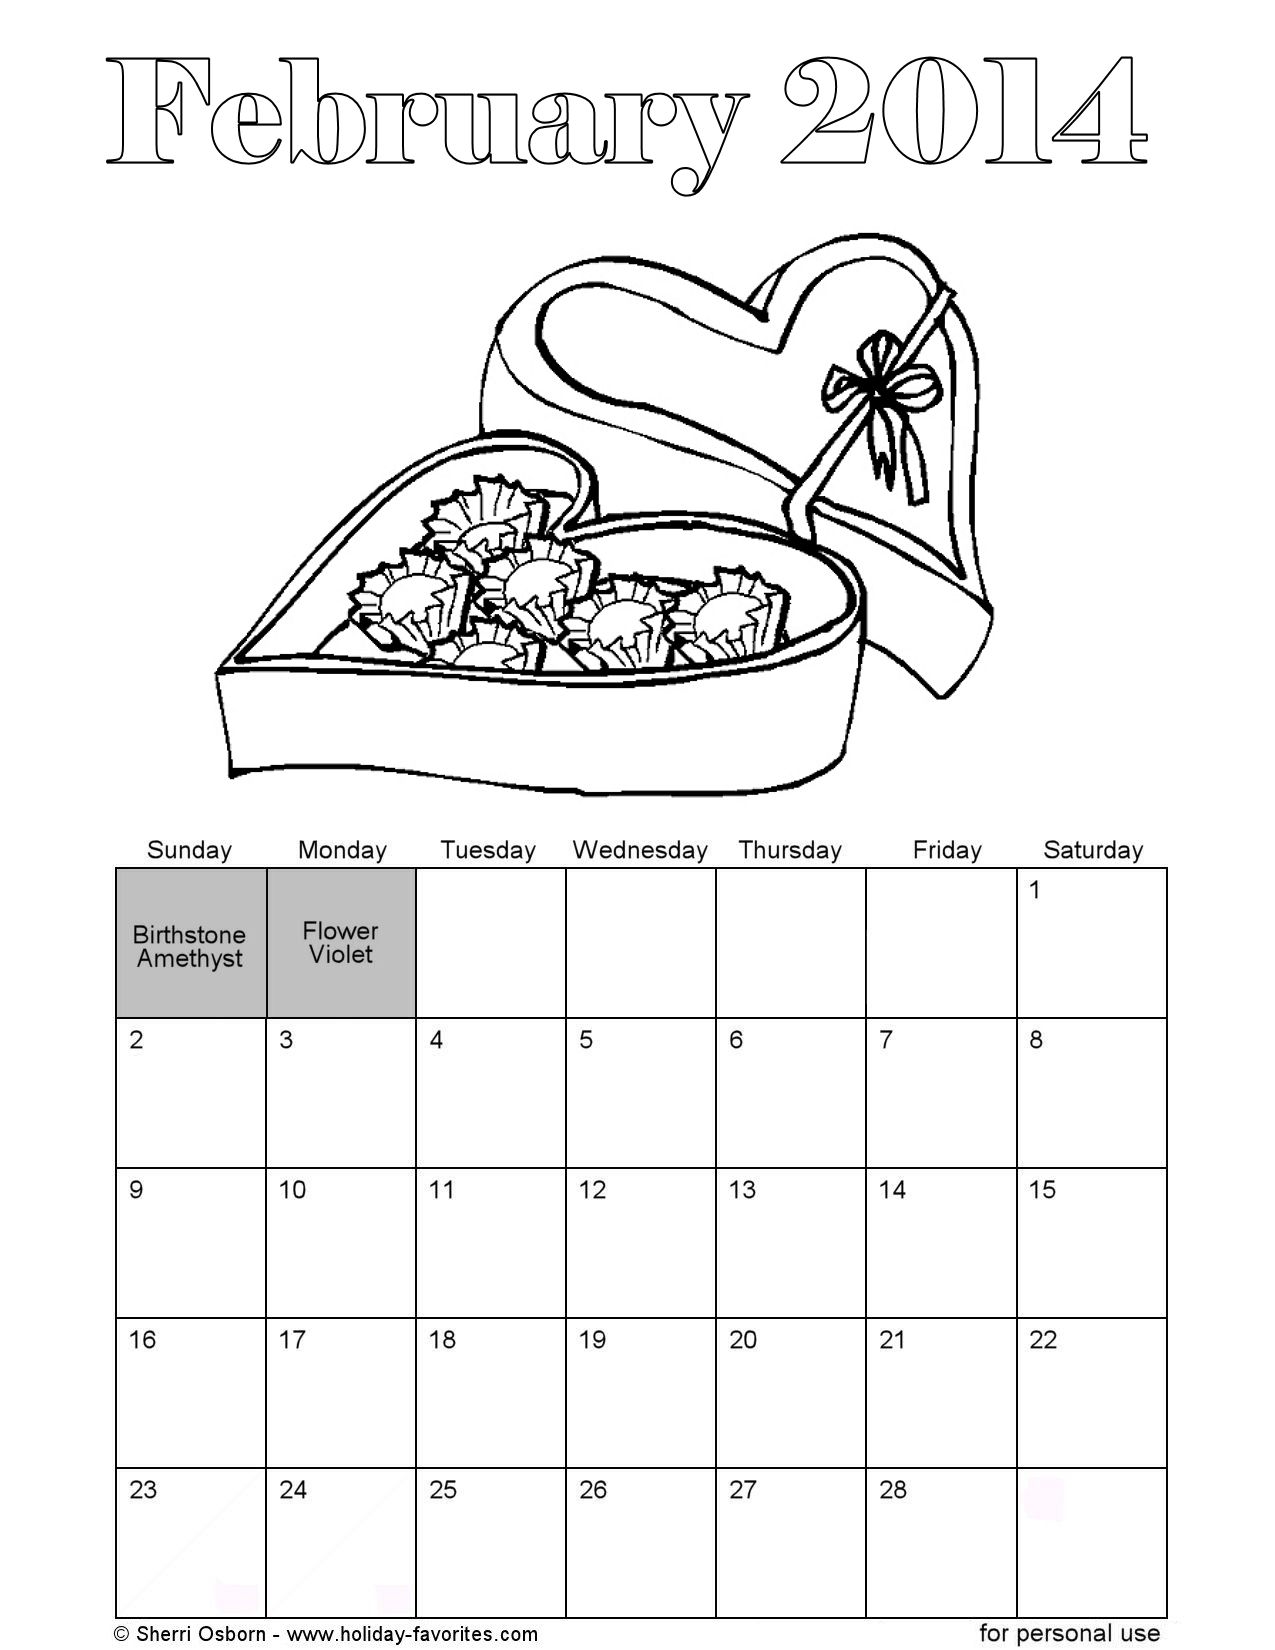 Printable February 2014 Calendars | Holiday Favorites